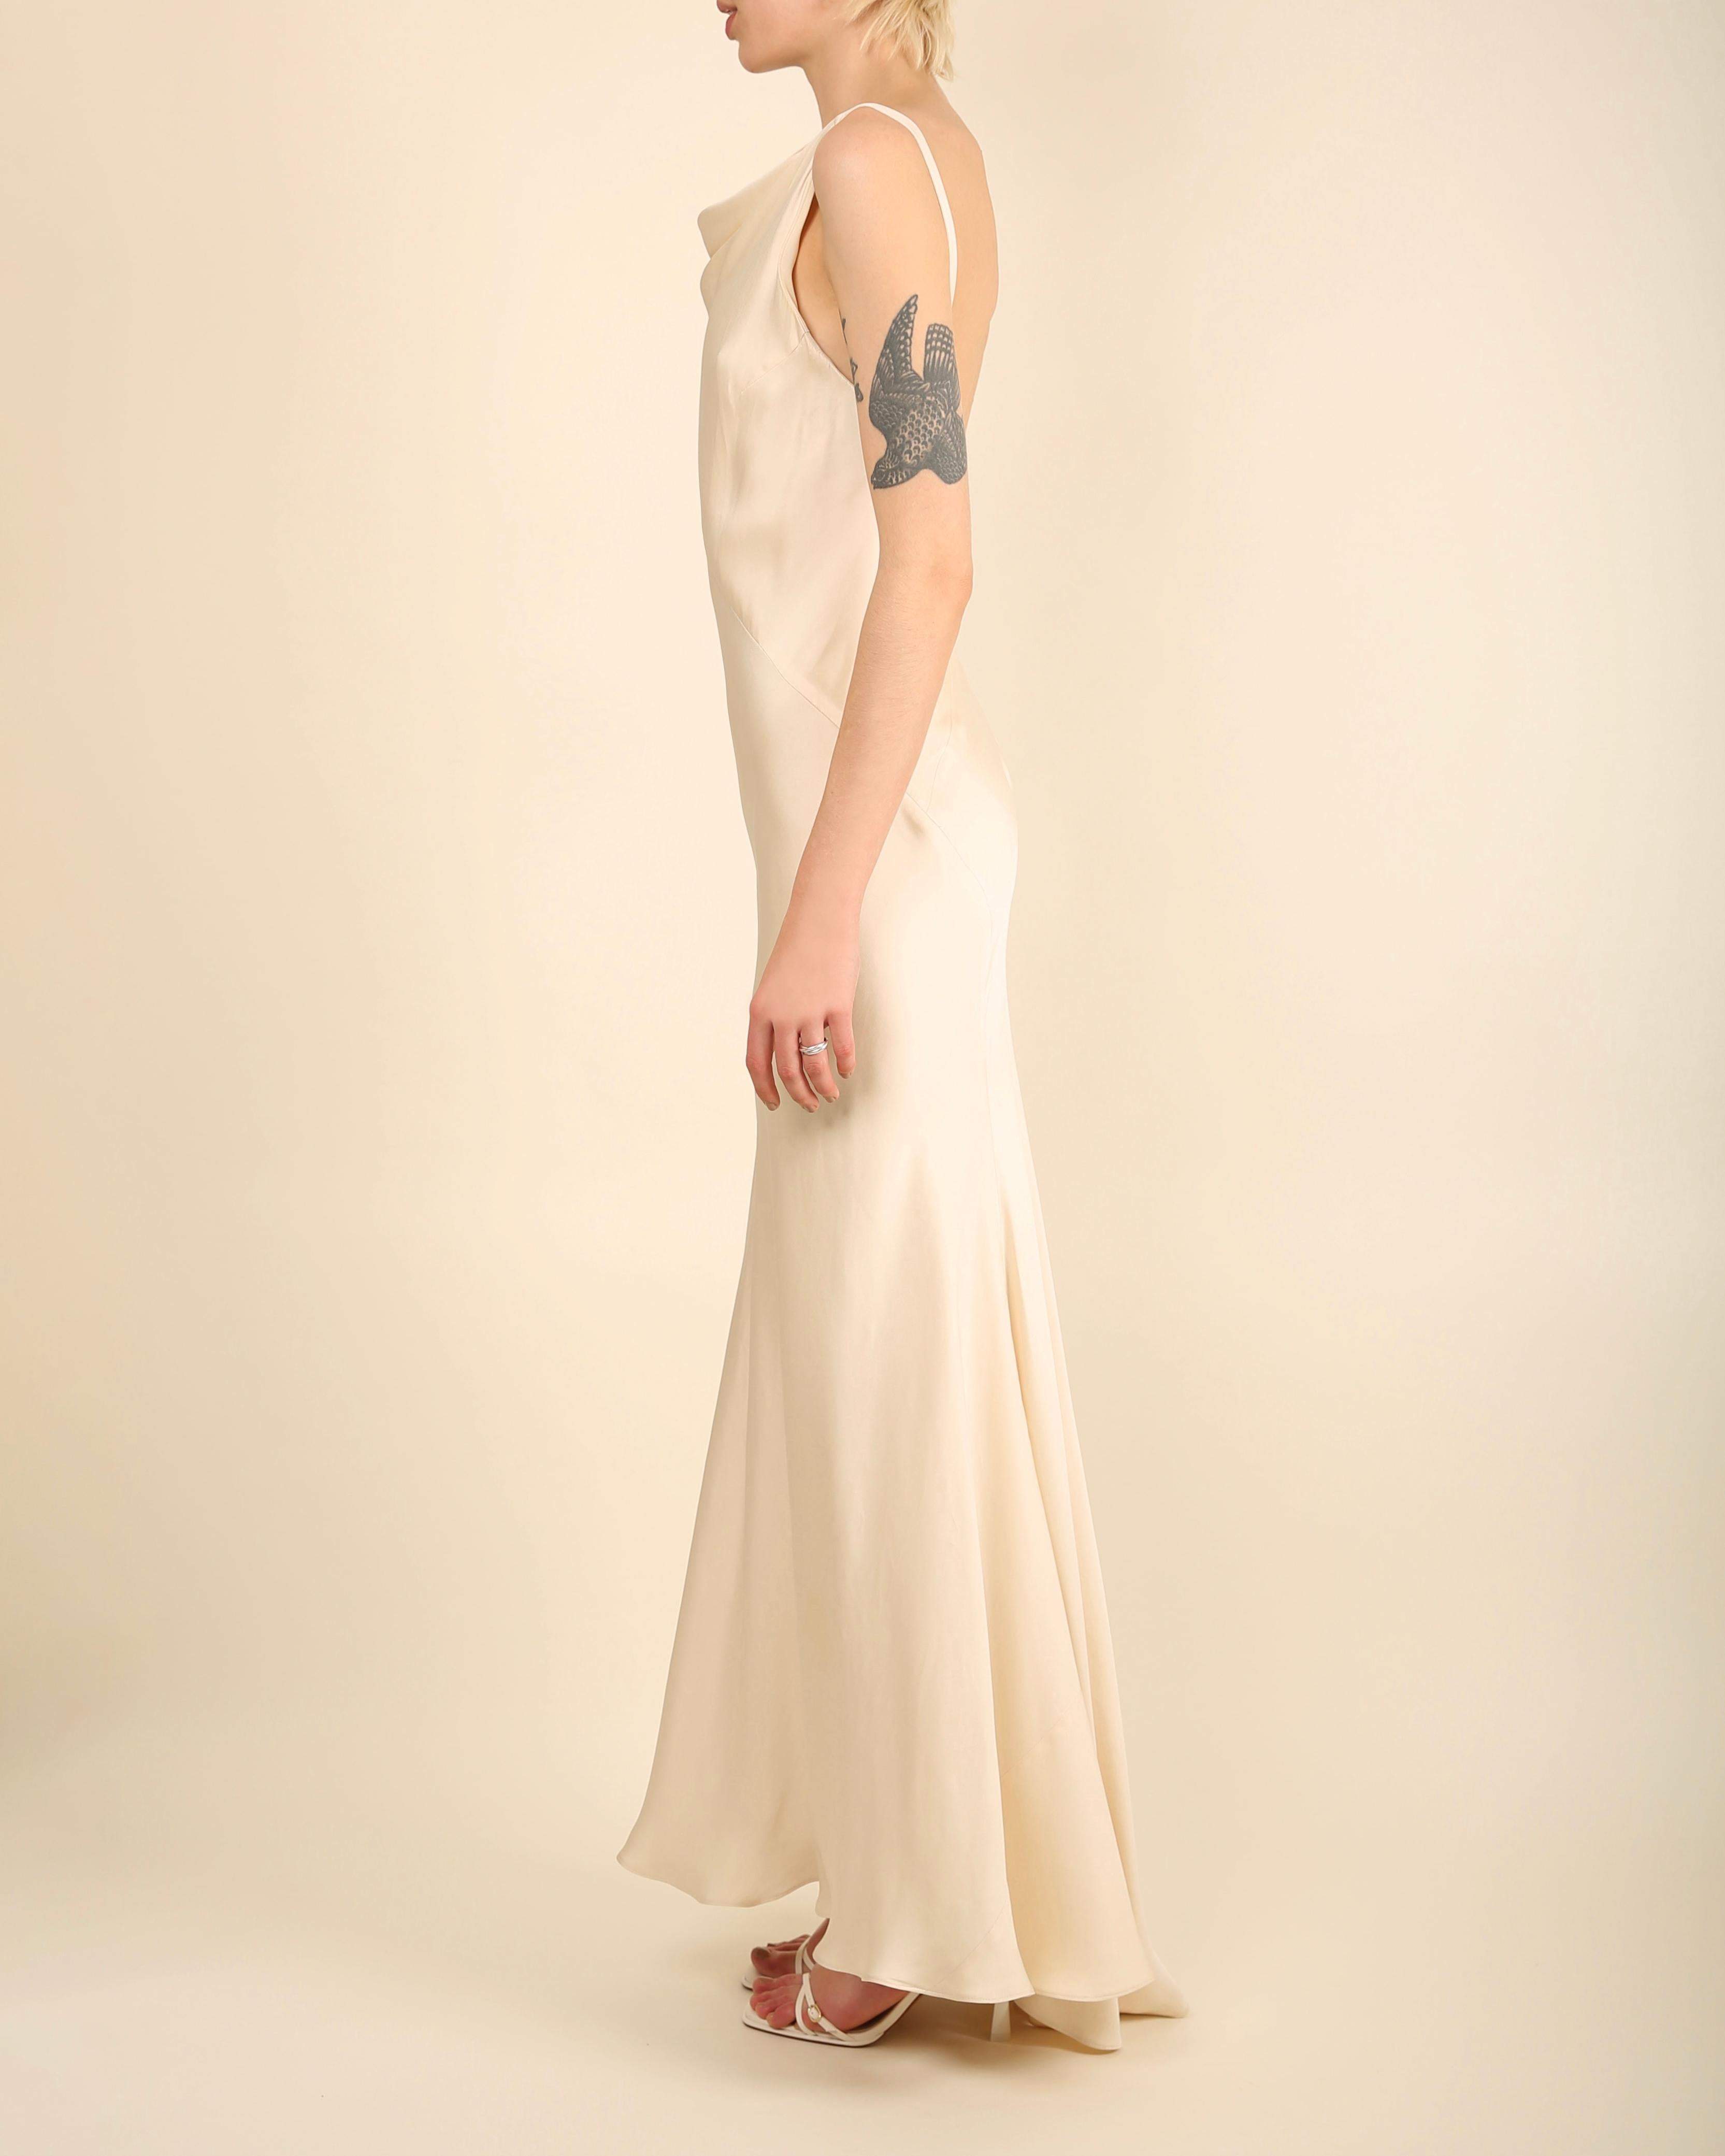 Ralph Lauren champagne bias cut backless silk slip style backless gown dress 2